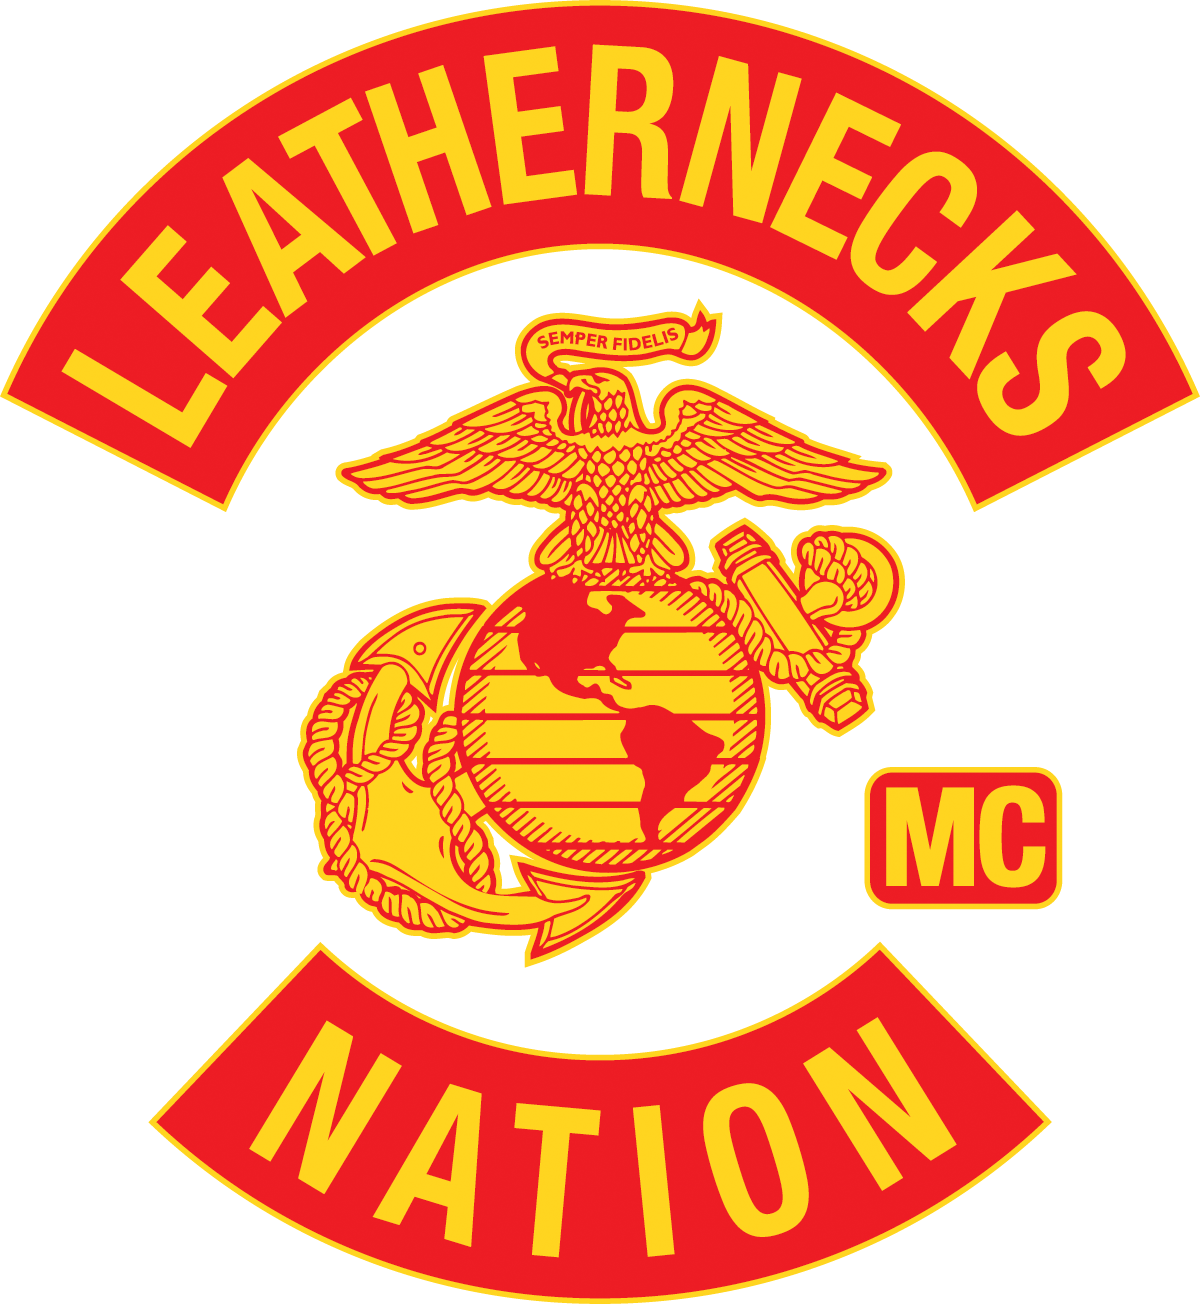 Leathernecks Nation MC - Virginia